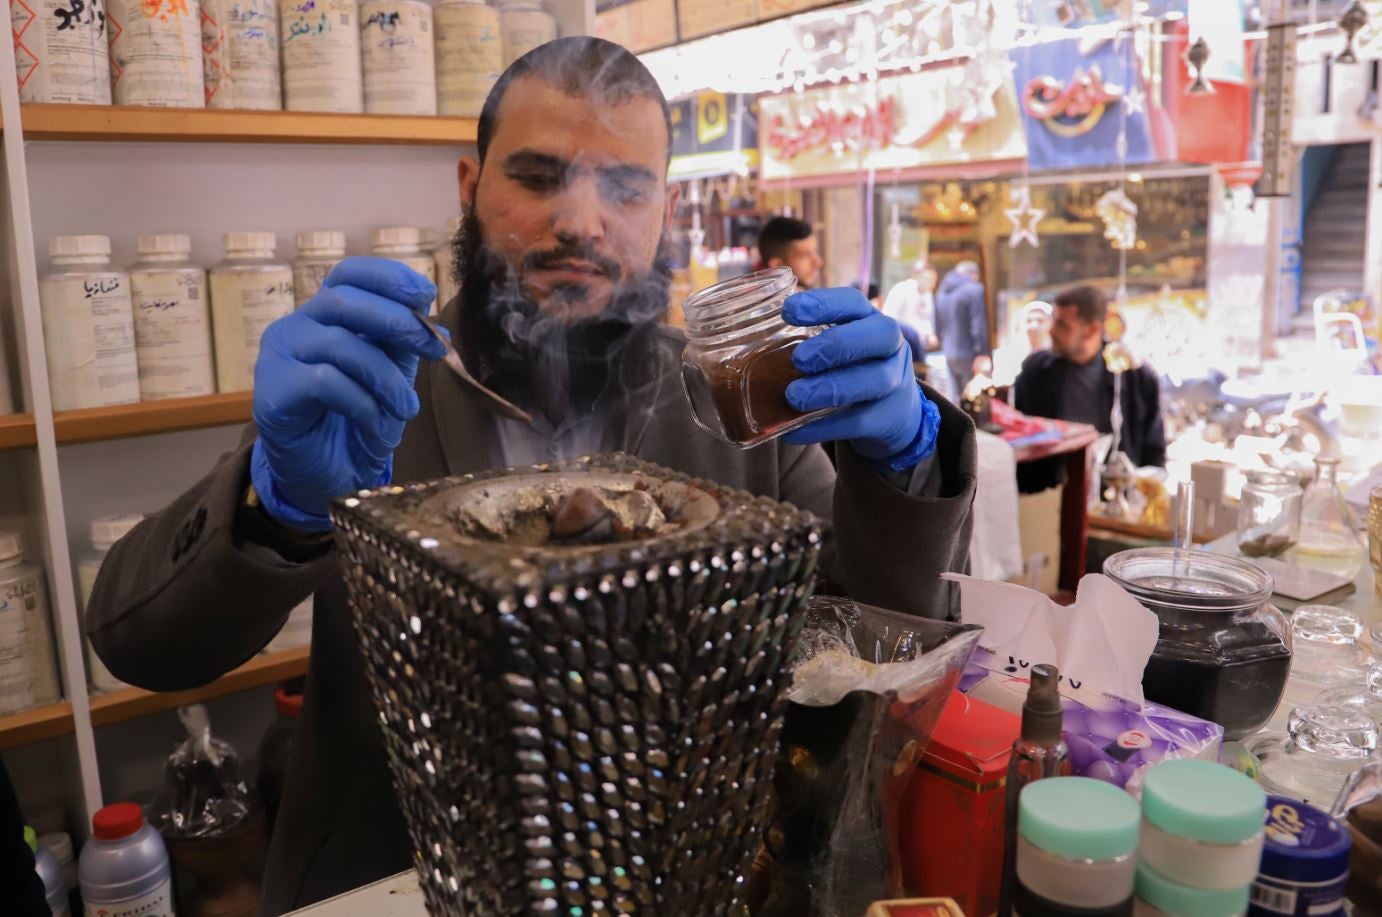 Gaza resident Ibrahim Abu Saraya was determined to master the art of producing incense